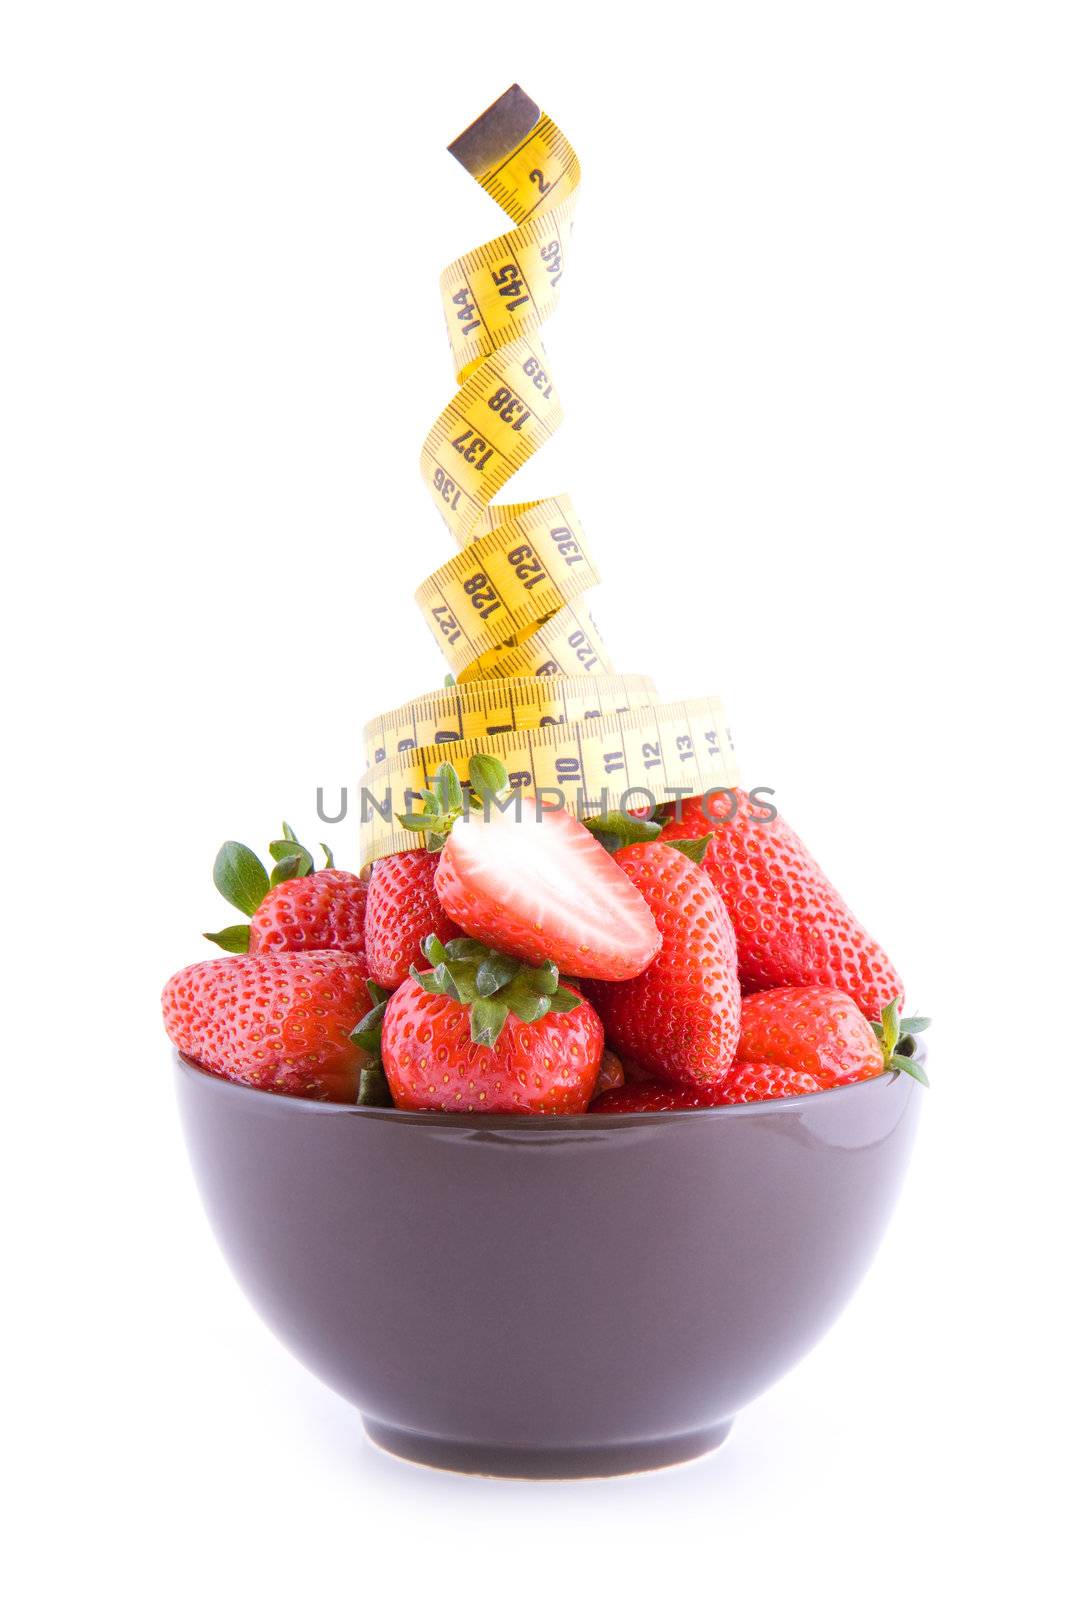 Strawberries in a grey bowl by Gbuglok